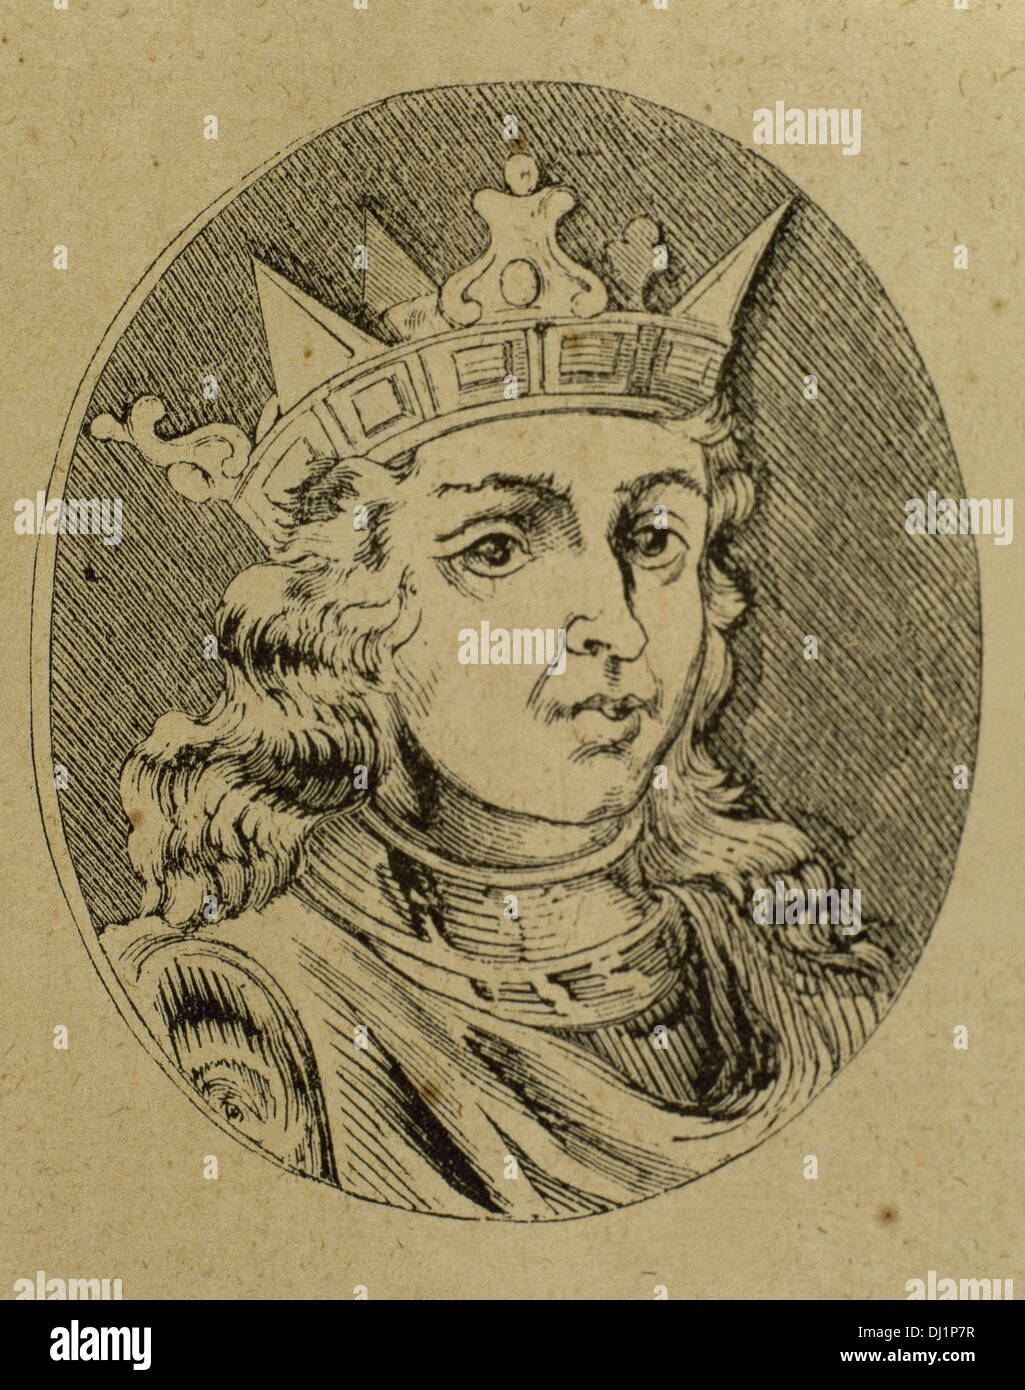 Bermudo III of León (1017-1037). King of Leon (1028-1037). Engraving. Stock Photo